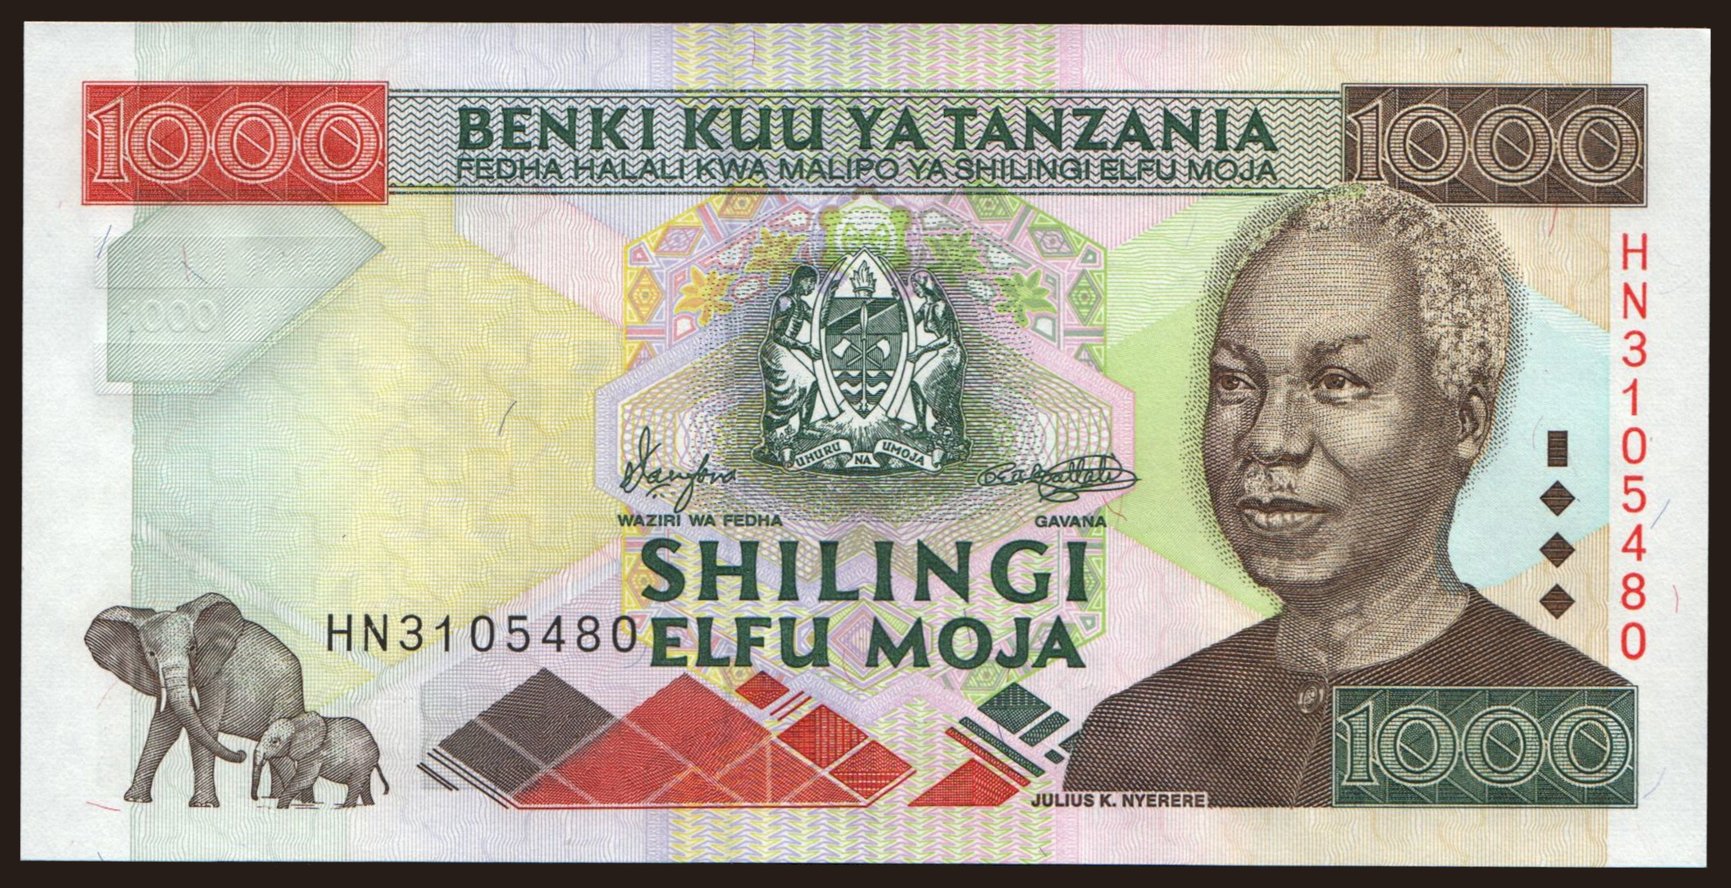 1000 shilingi, 2000